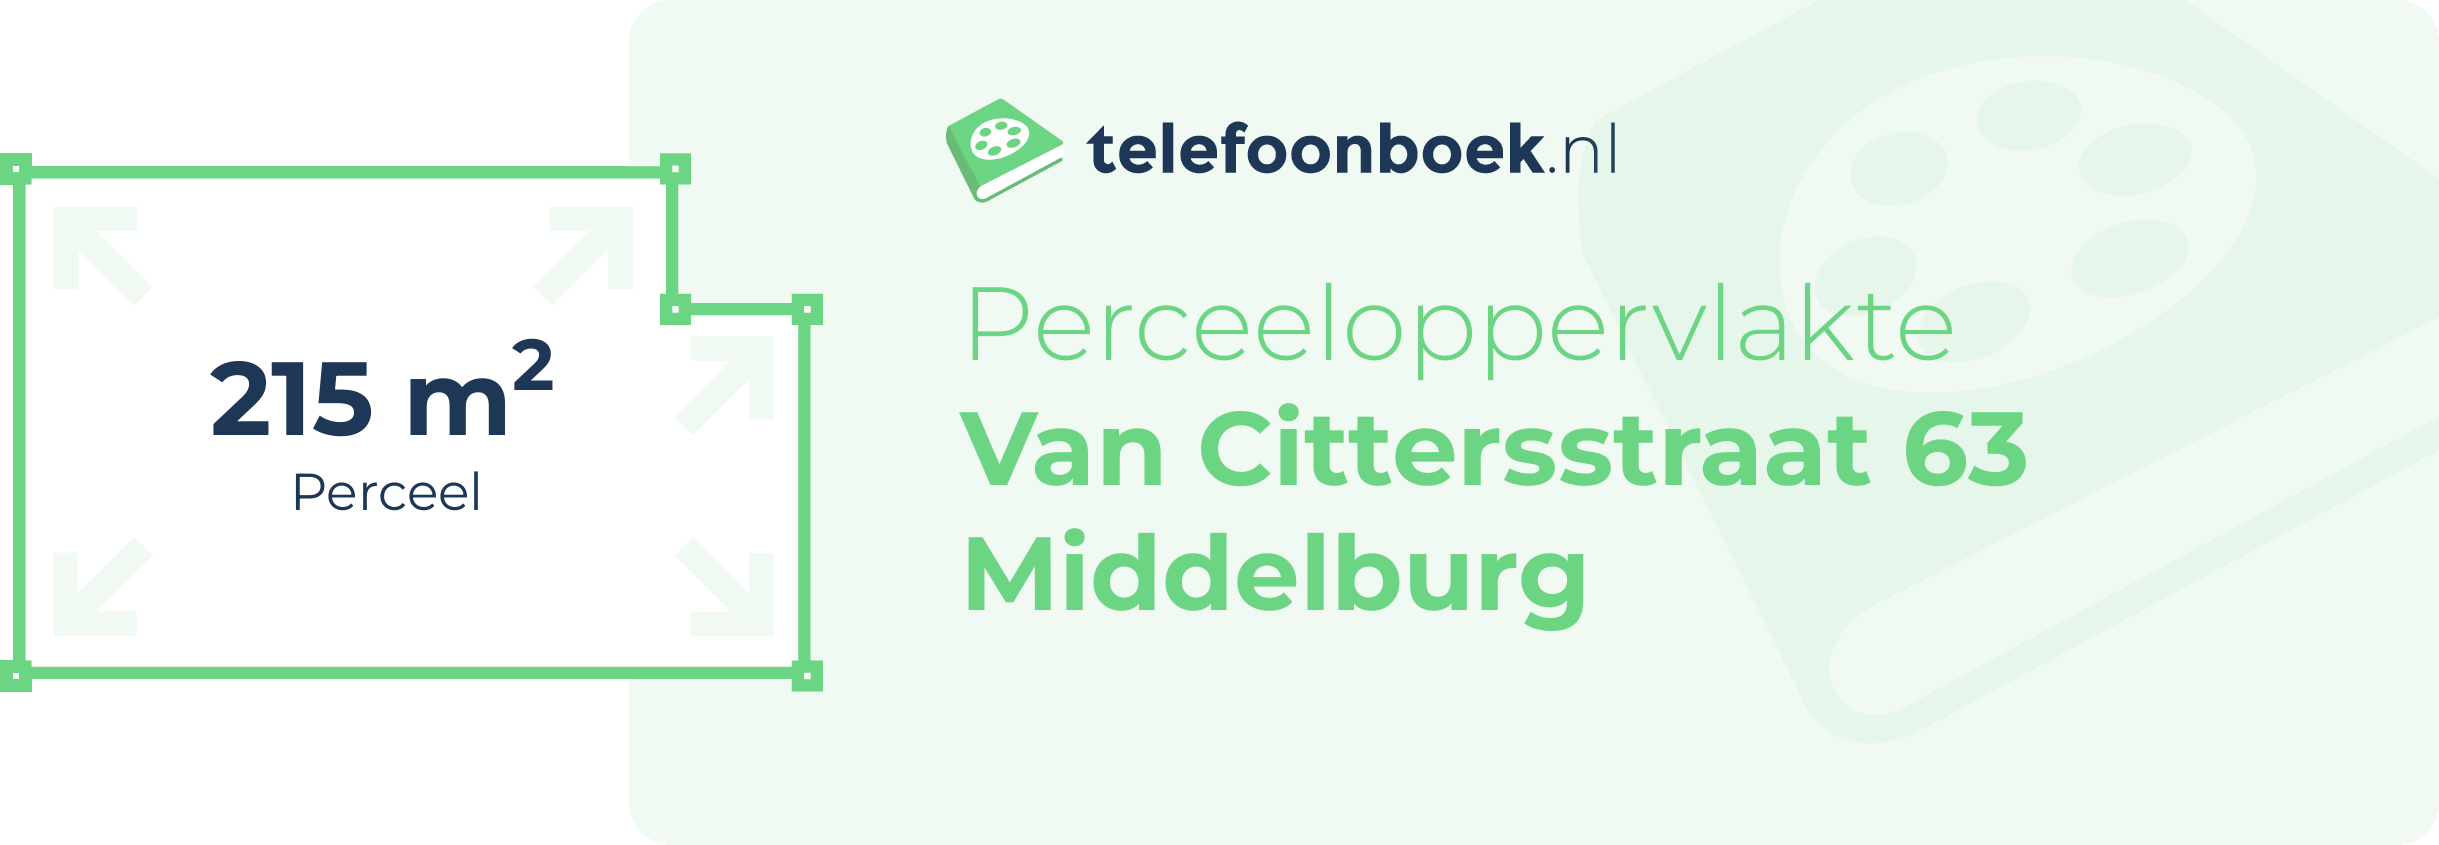 Perceeloppervlakte Van Cittersstraat 63 Middelburg